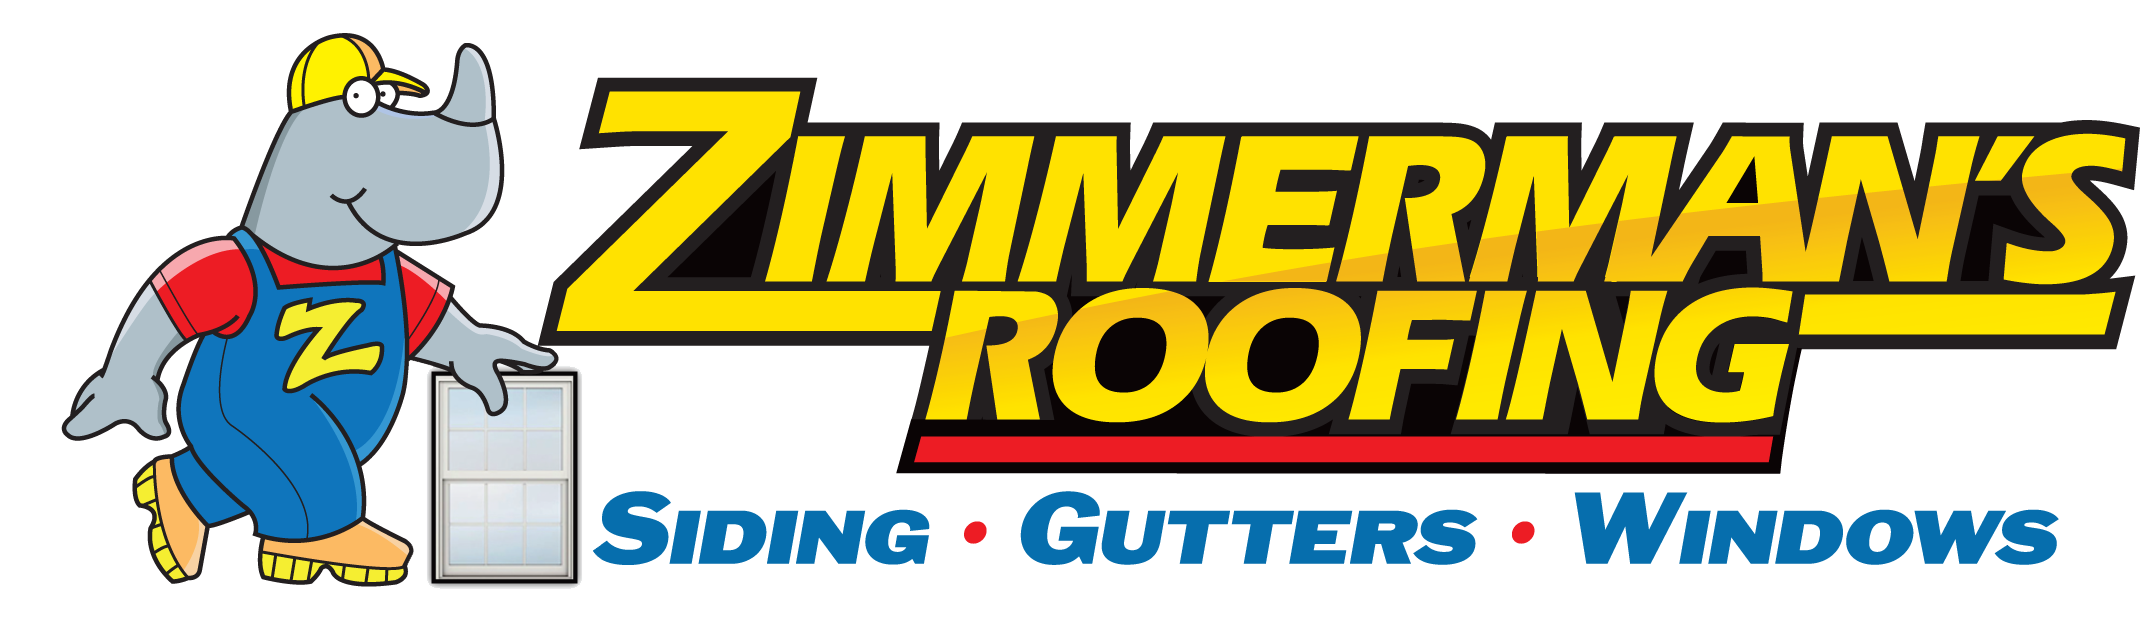 Zimmerman's Roofing Logo